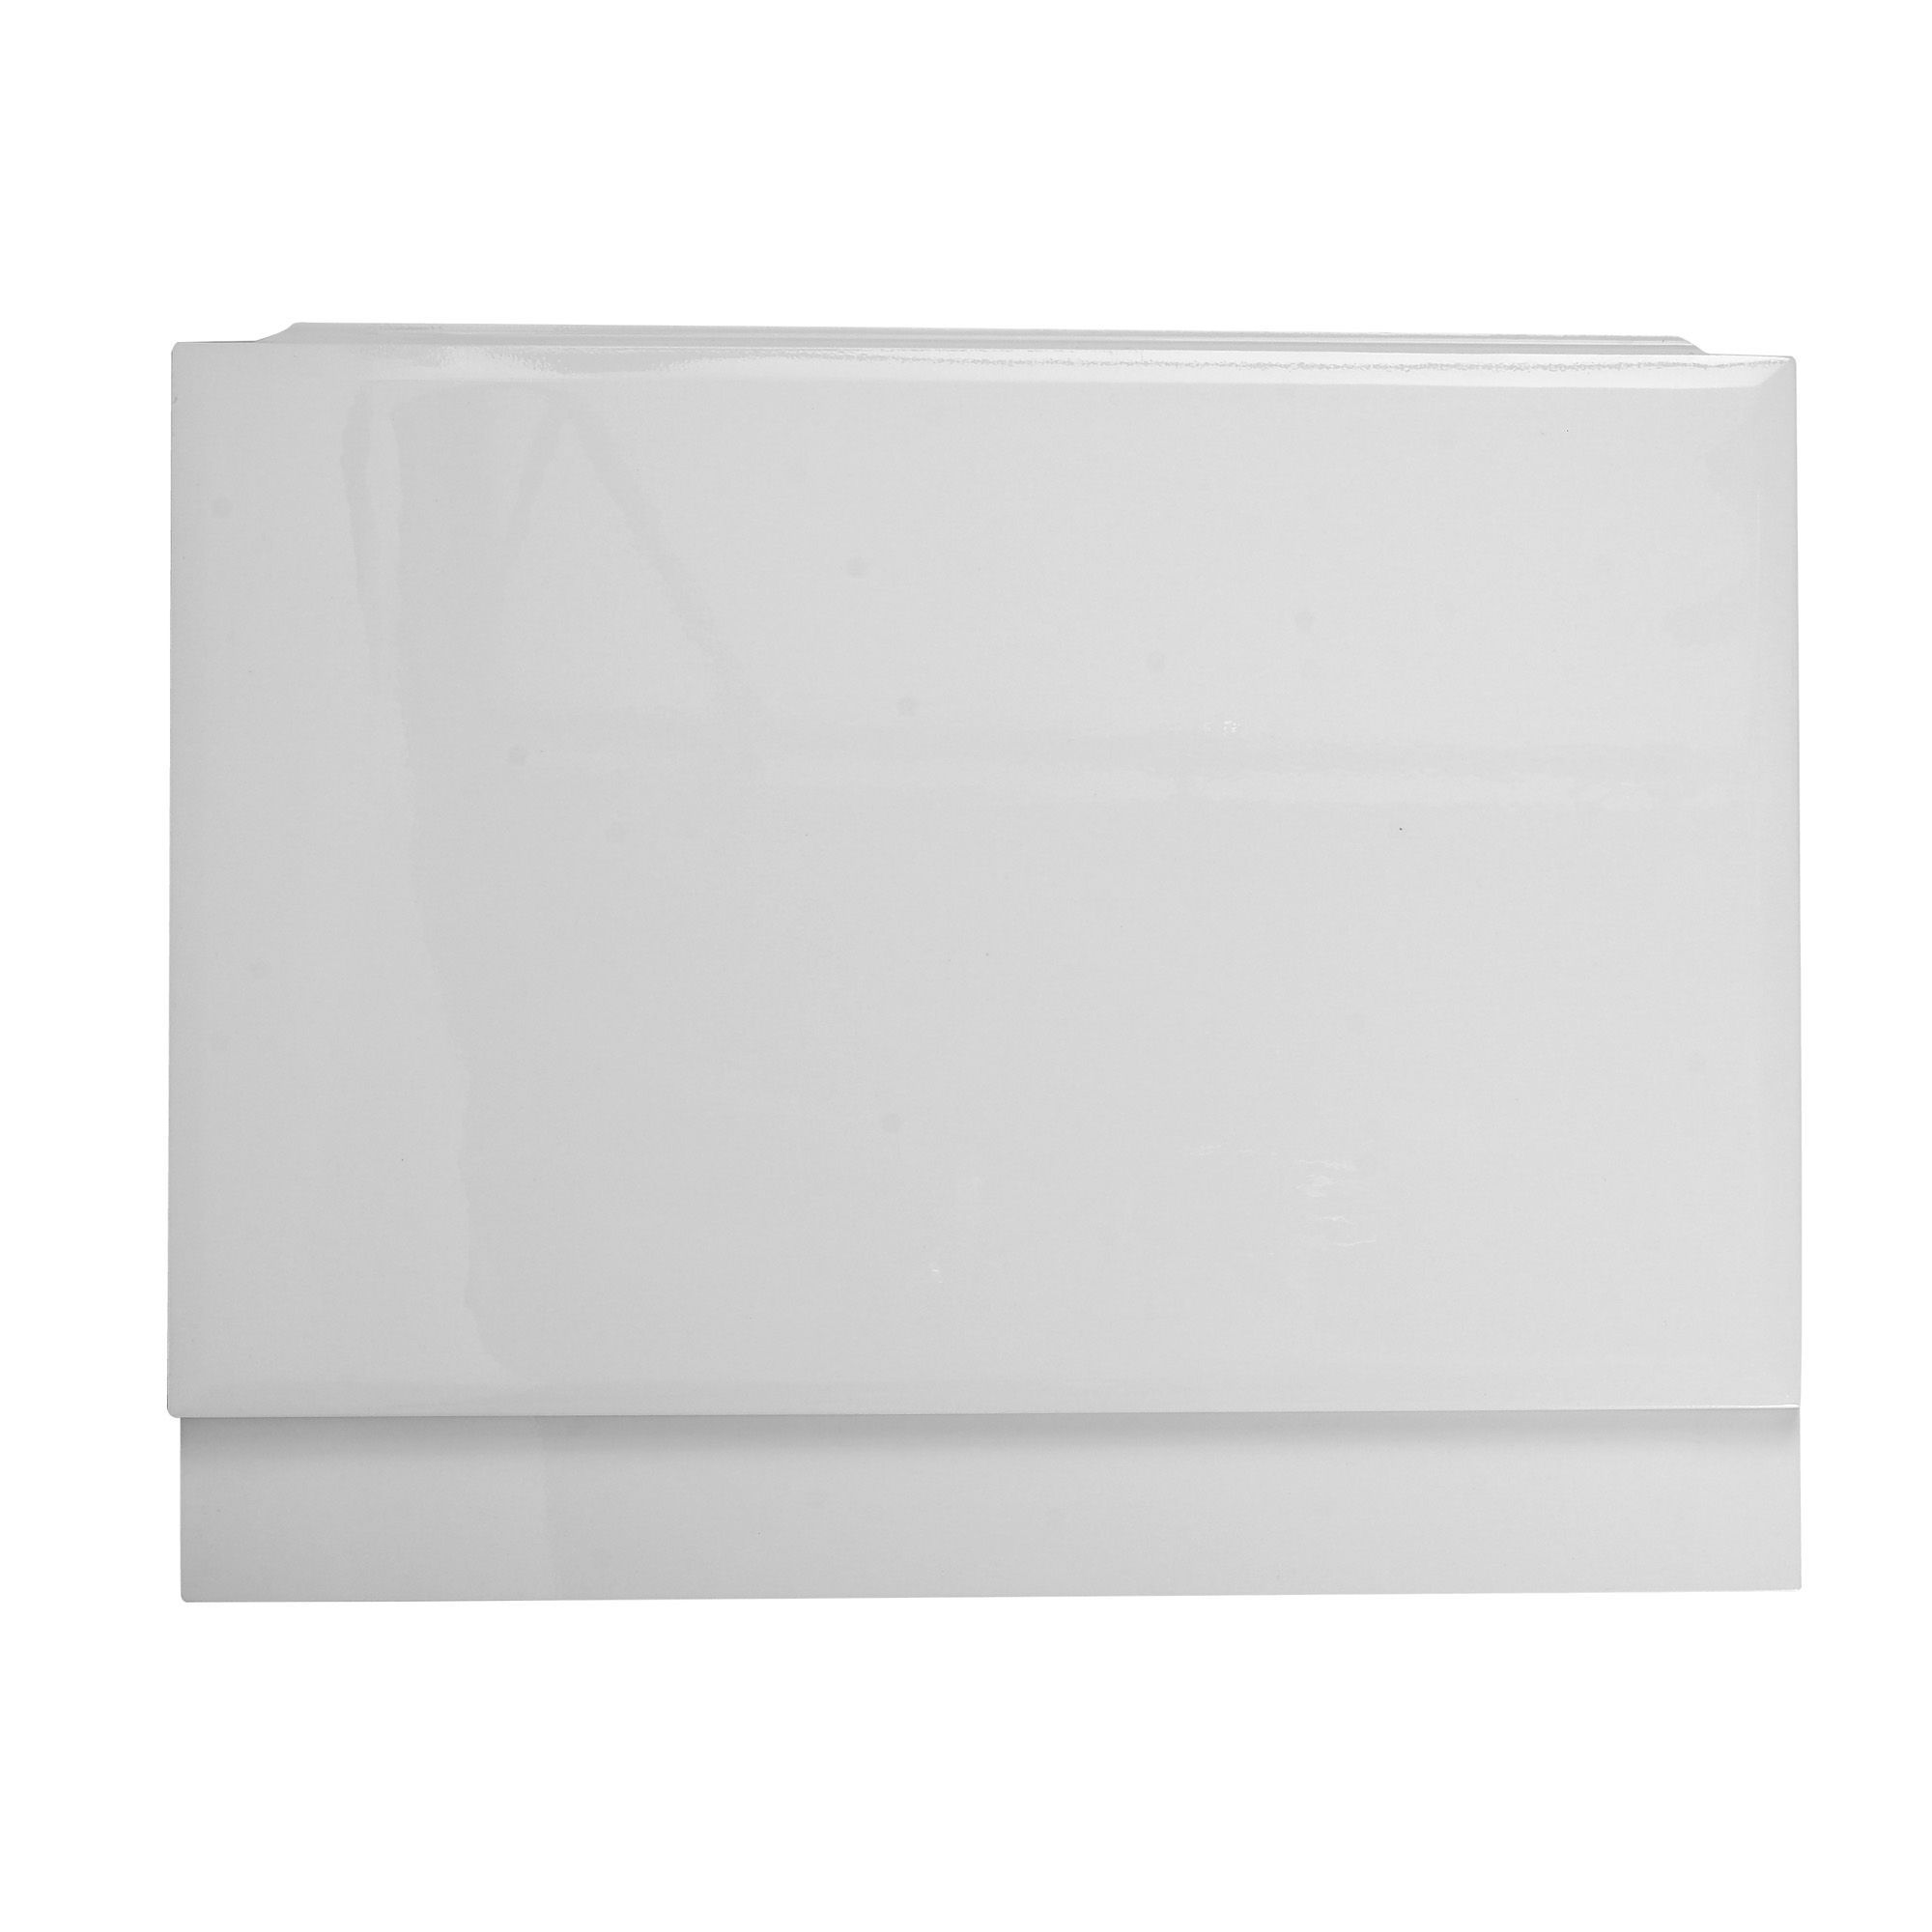 Cooke & Lewis Gloss White End Bath panel (H)56cm (W)68.5cm